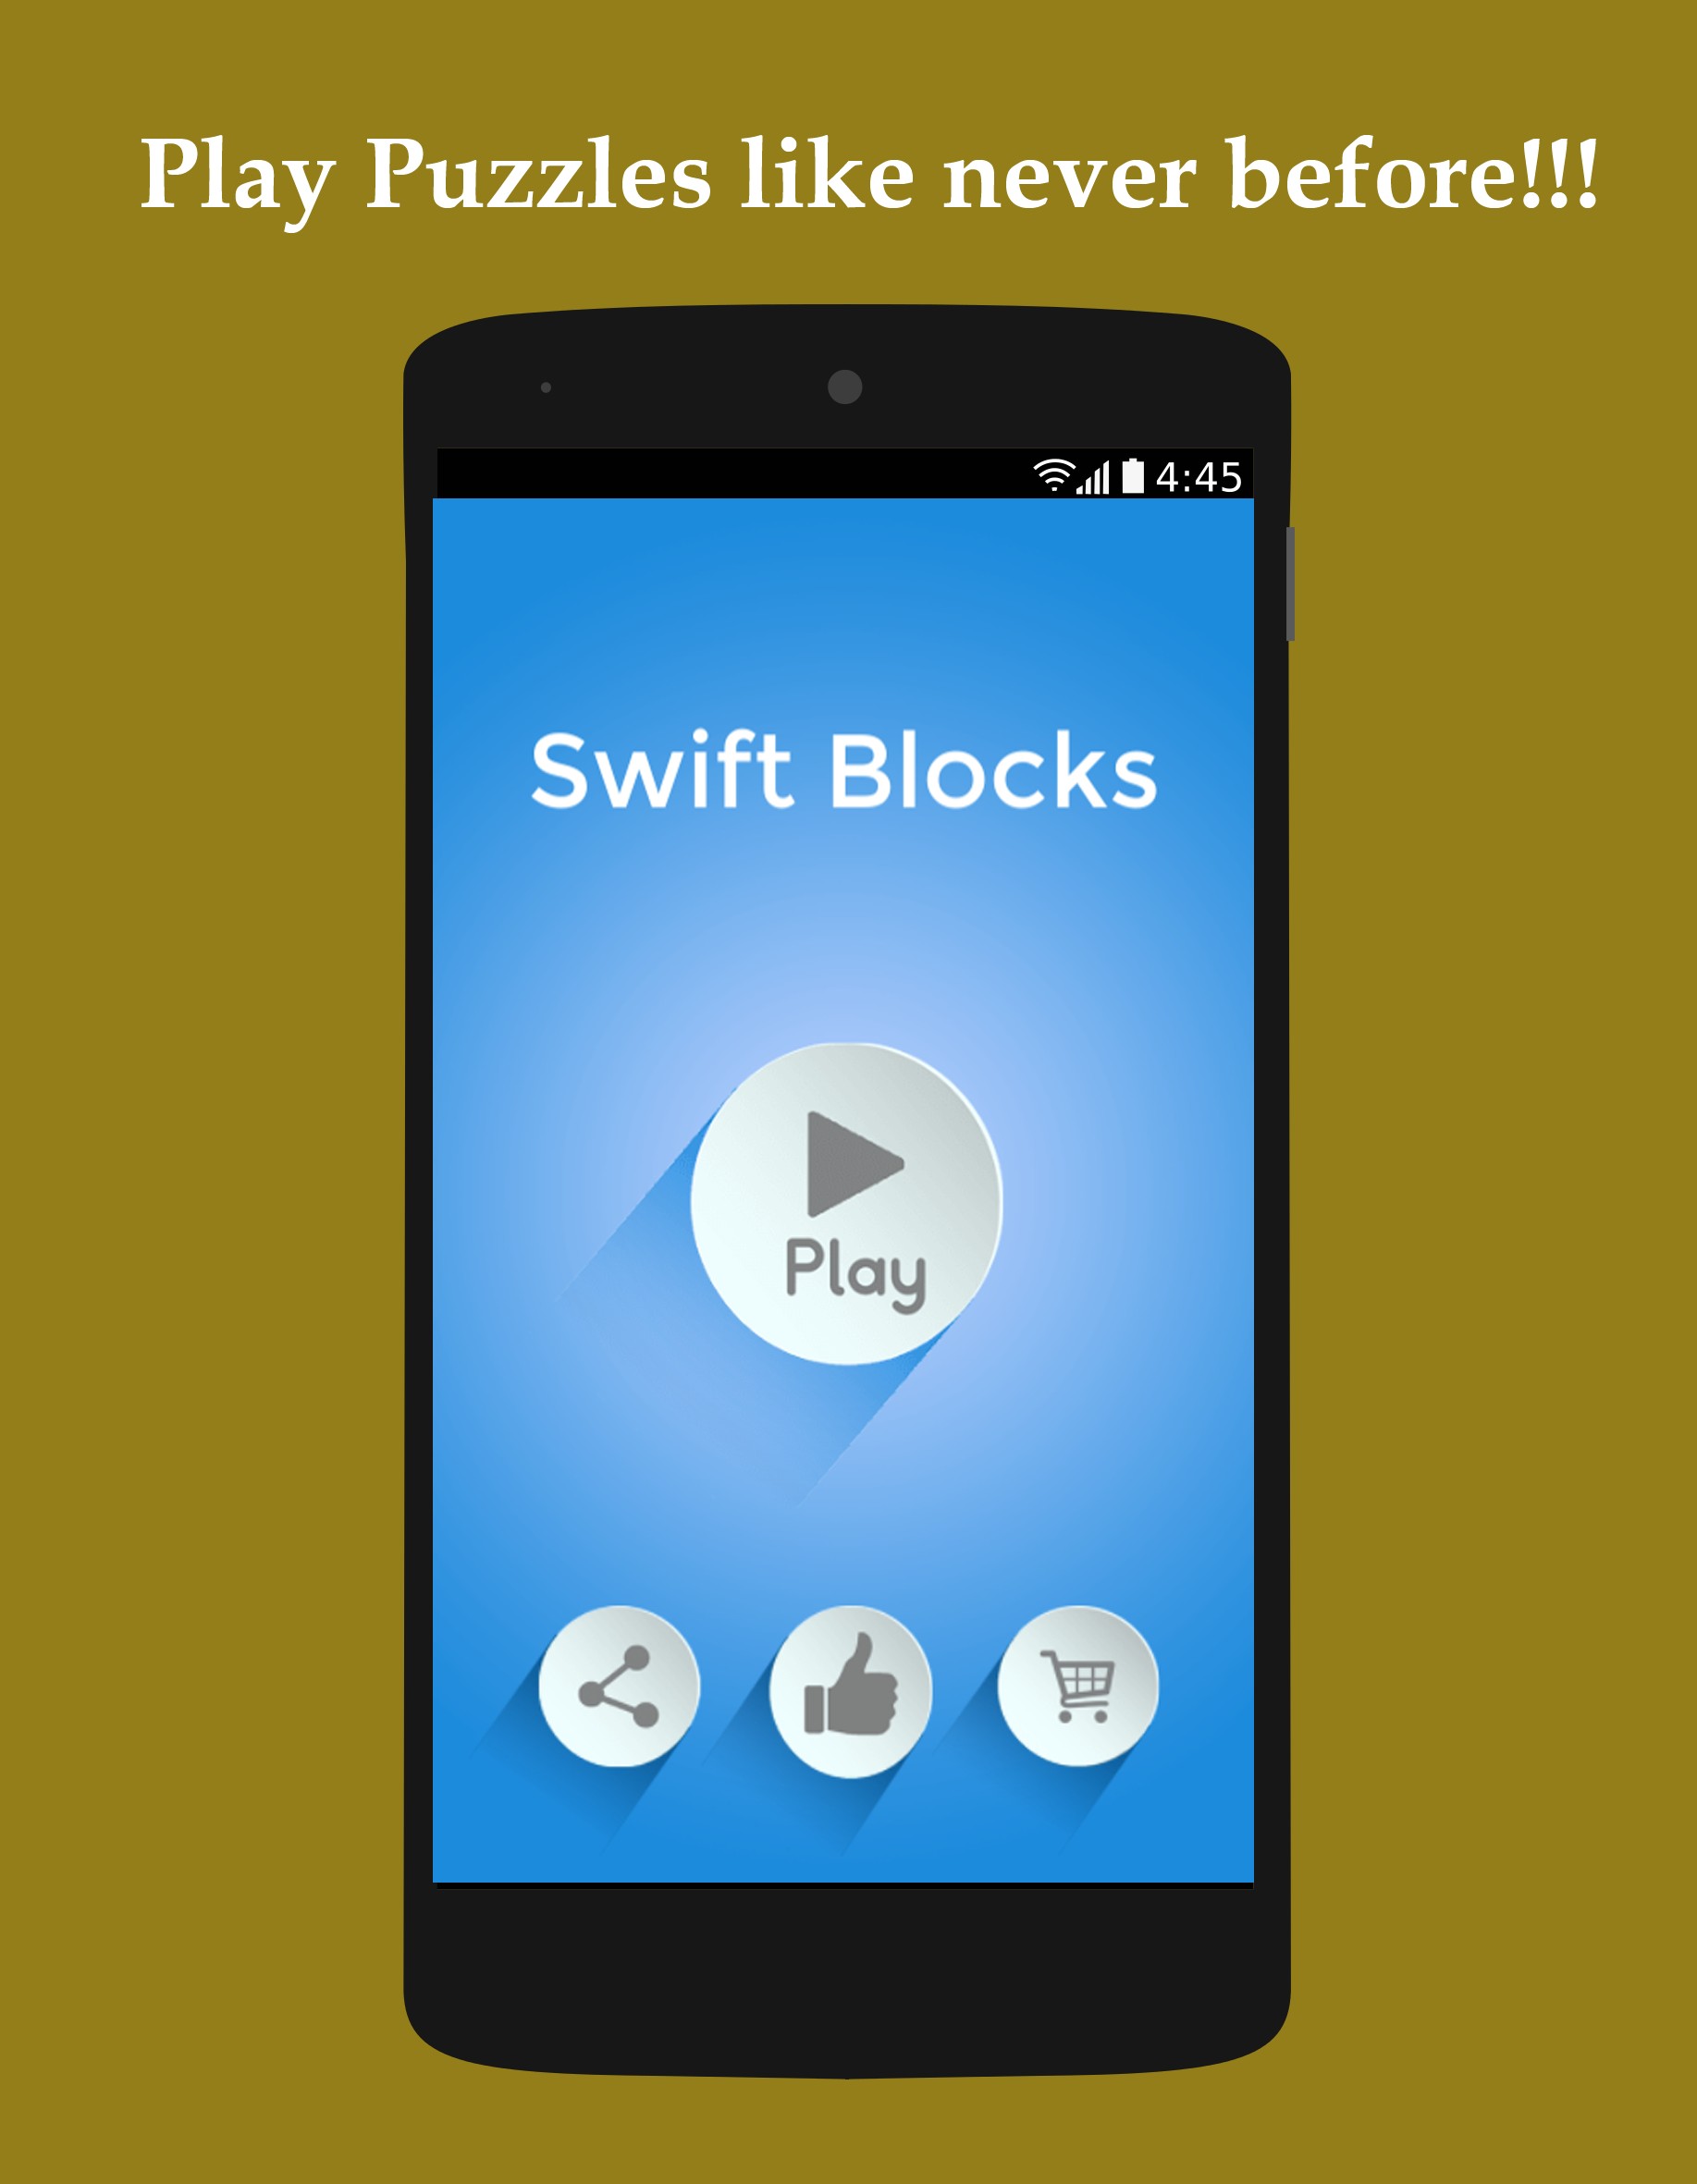 Swift Blocks